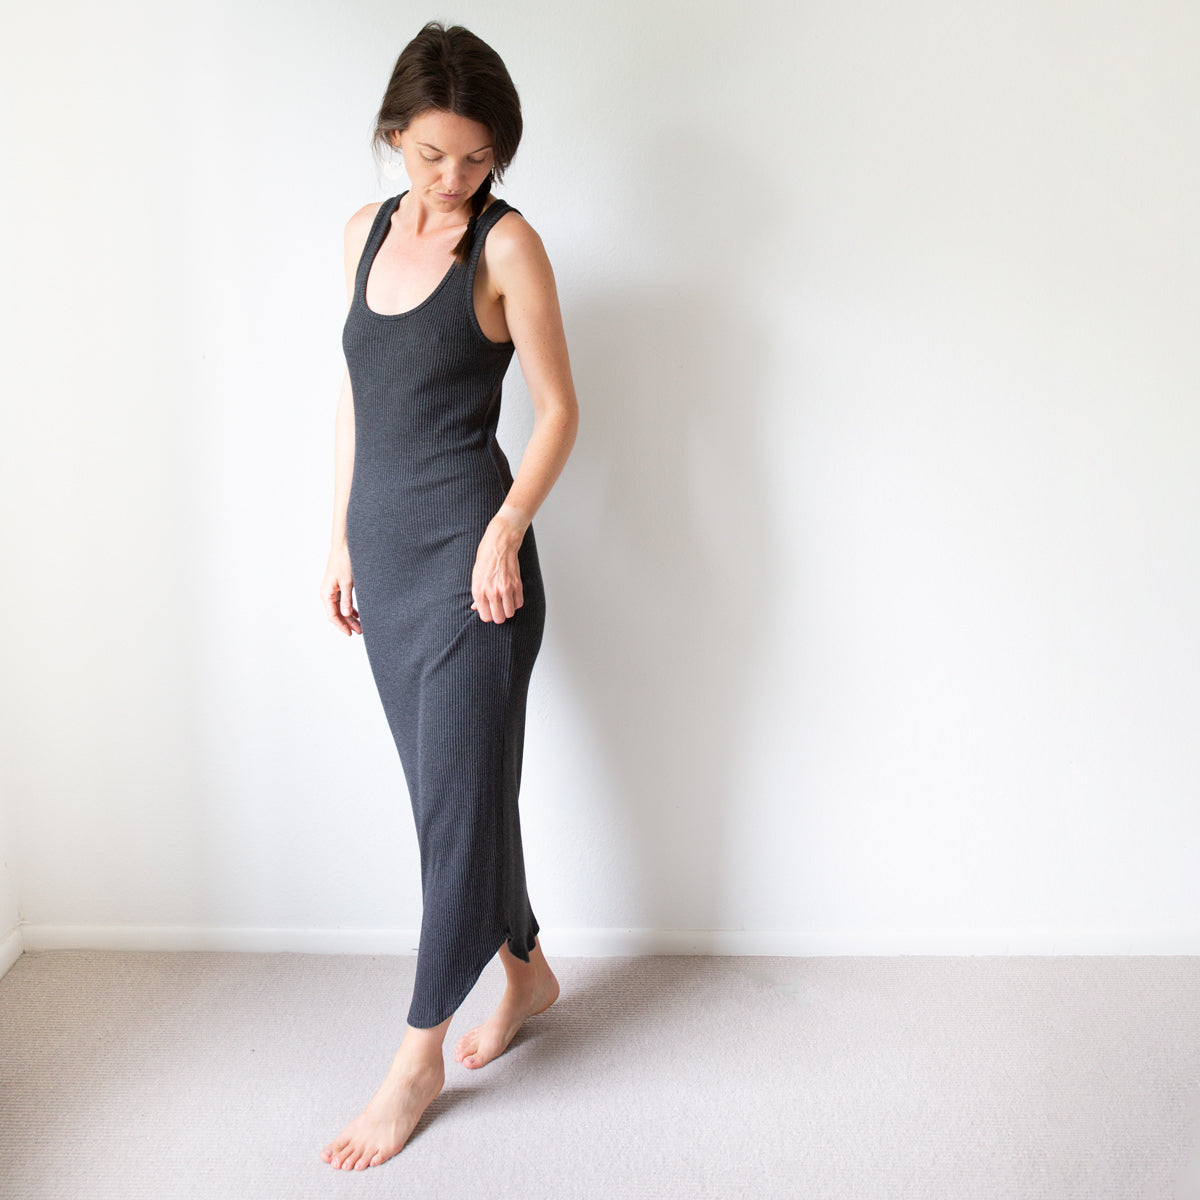 Midi Length Kila Dress | Sewing Pattern by Allie Olson